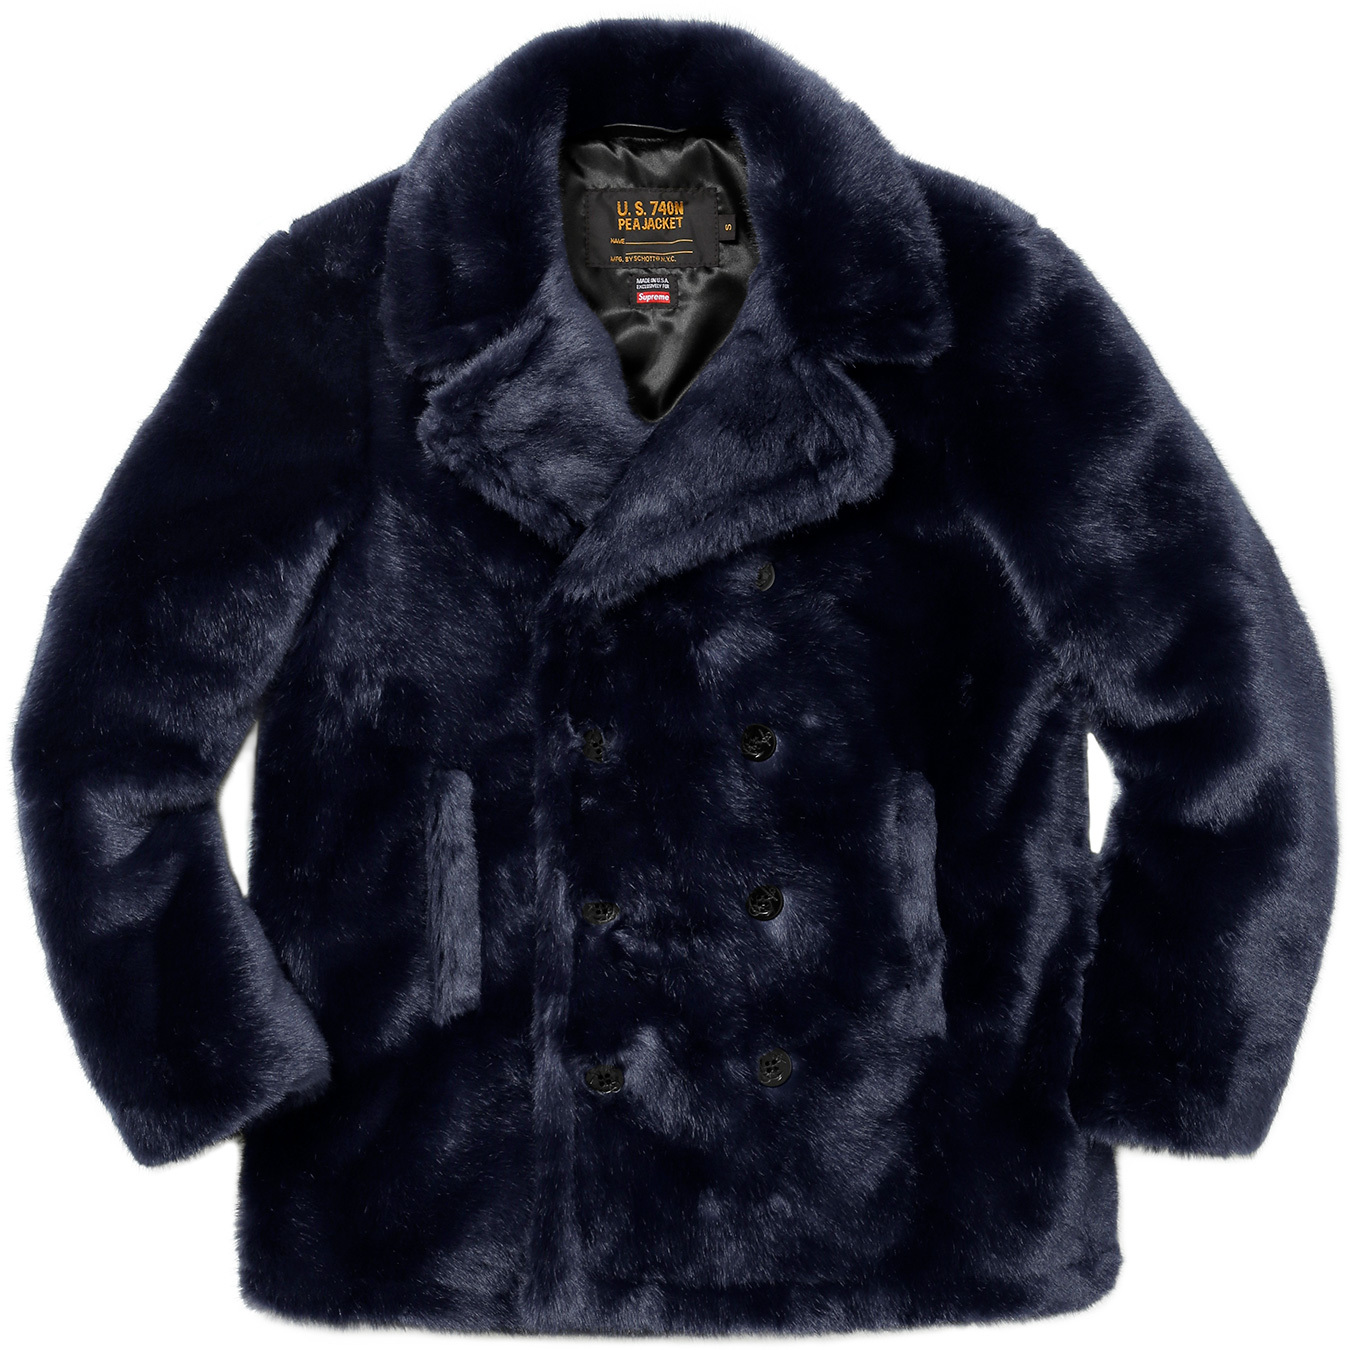 Supreme®/Schott® Fur Peacoat - Supreme Community